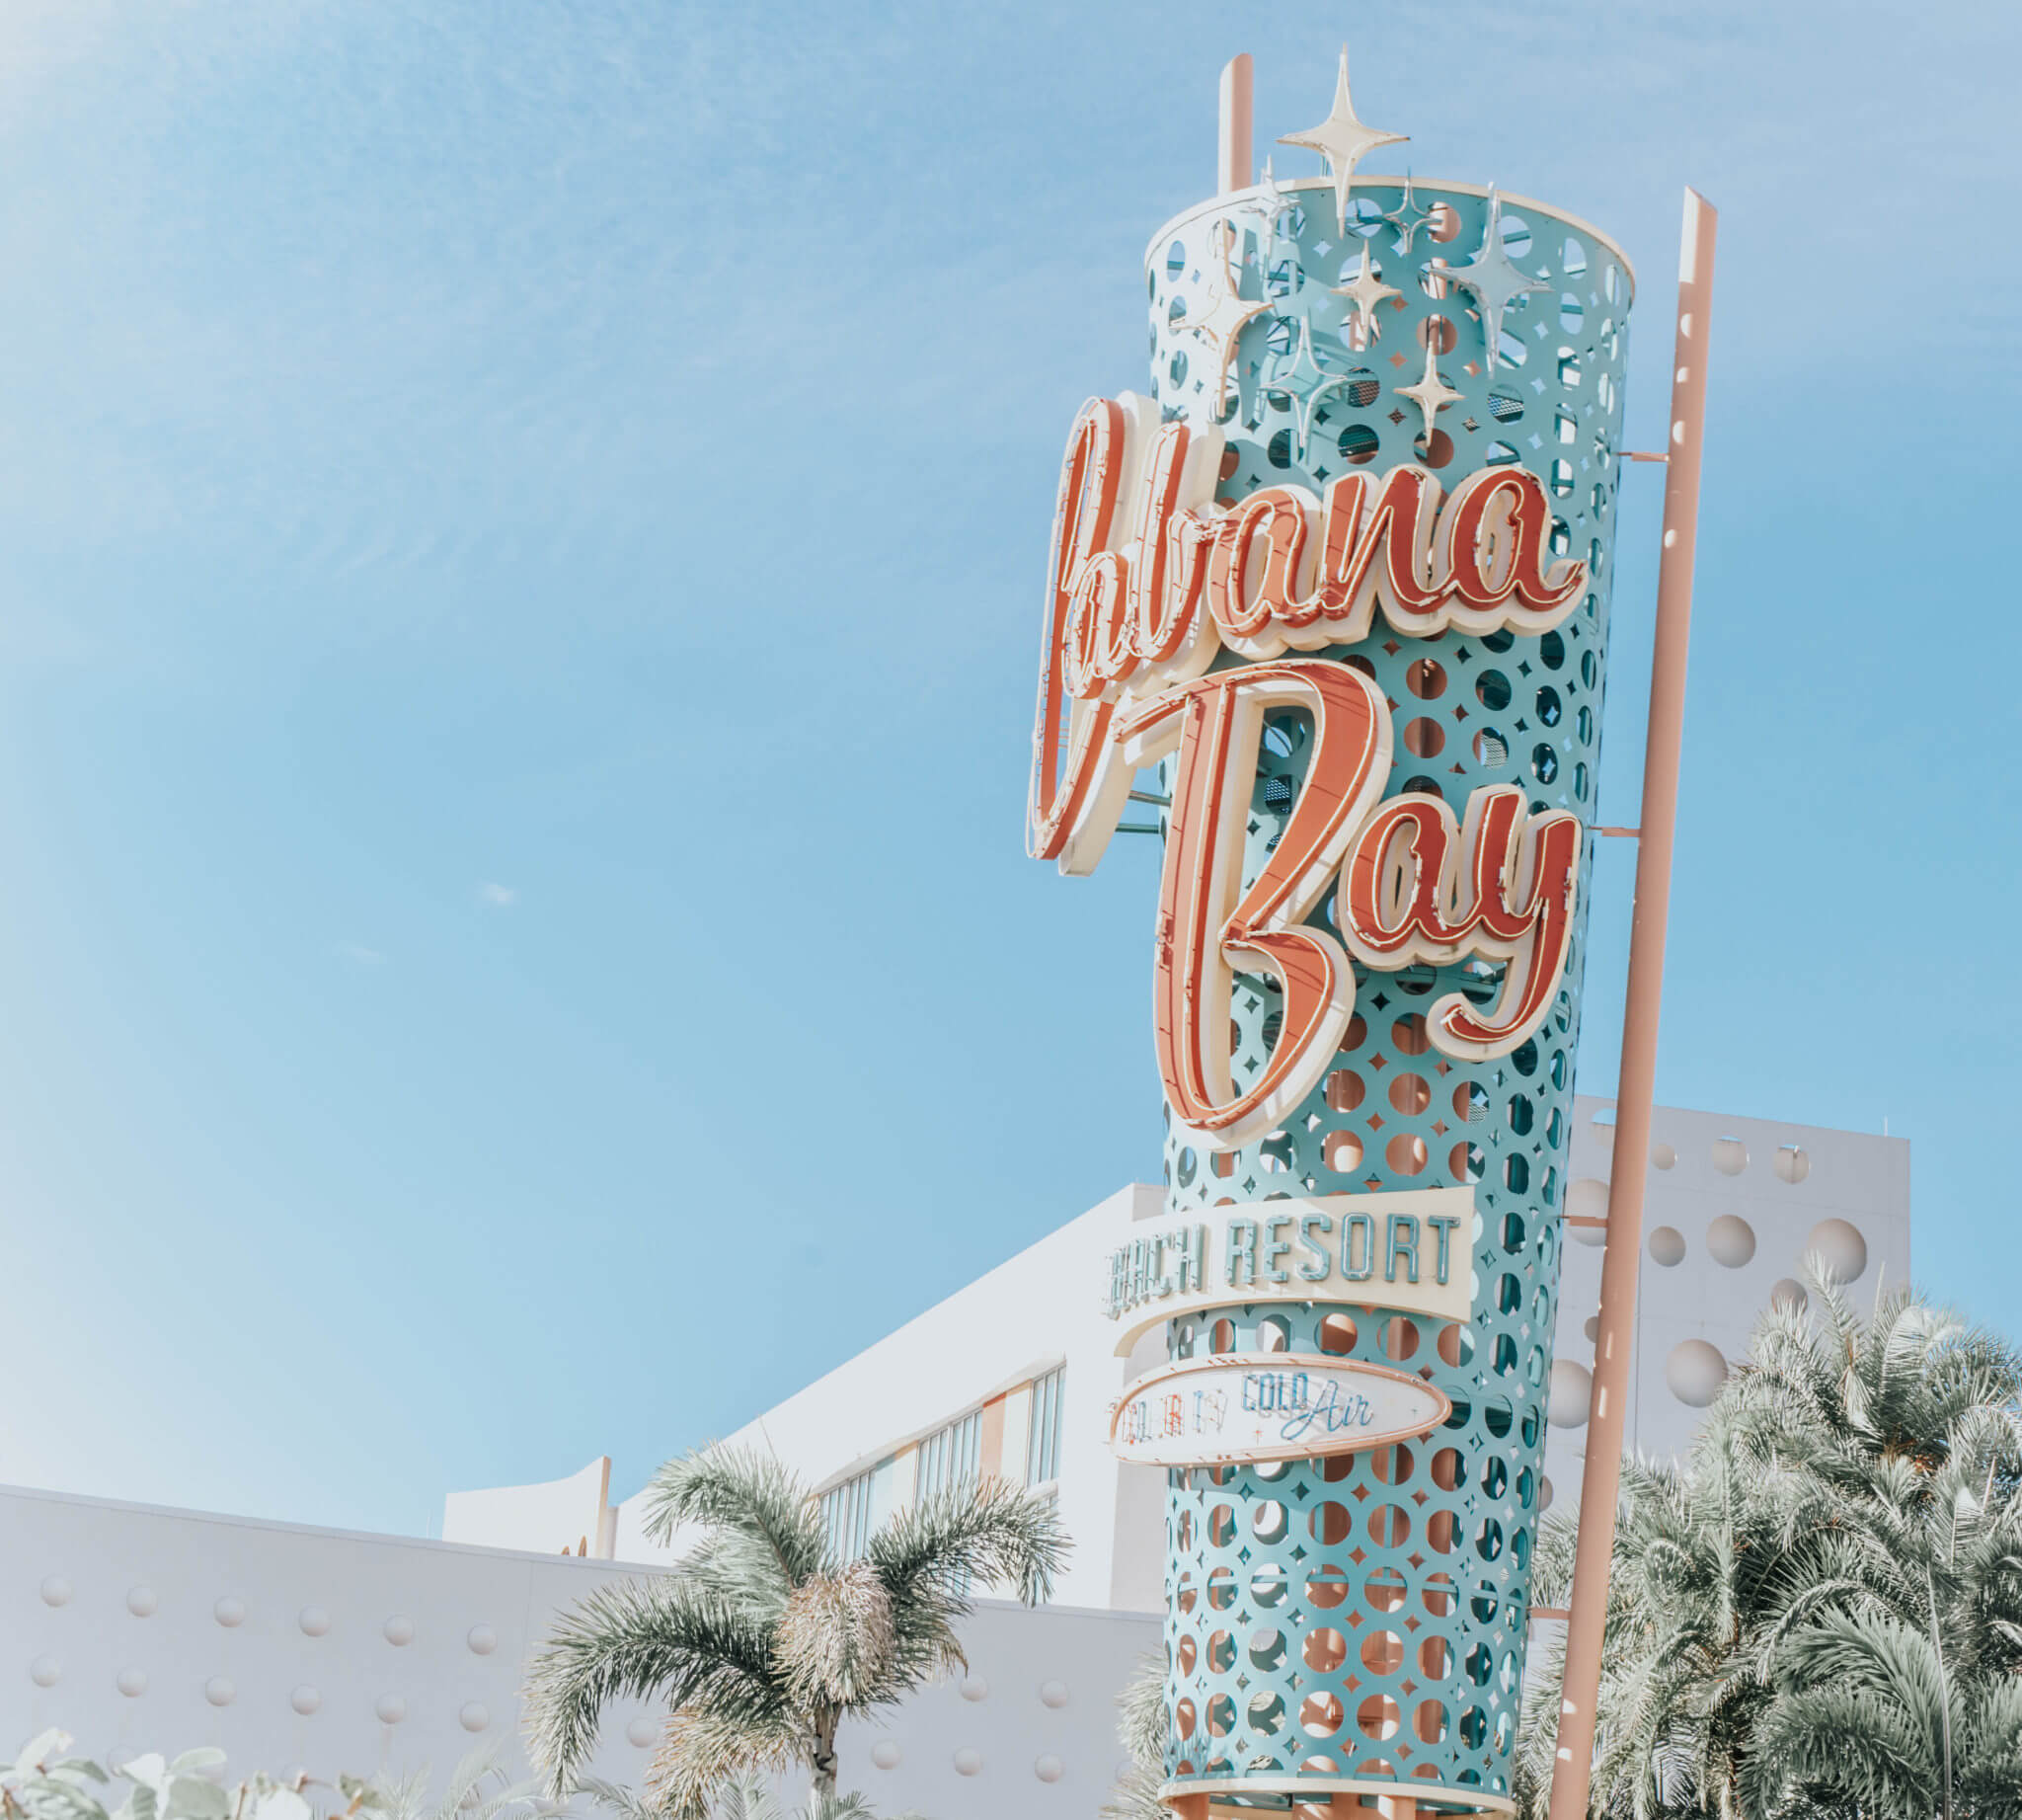 Cabana Bay Beach Resort Entrance Sign at Universal Studios Orlando